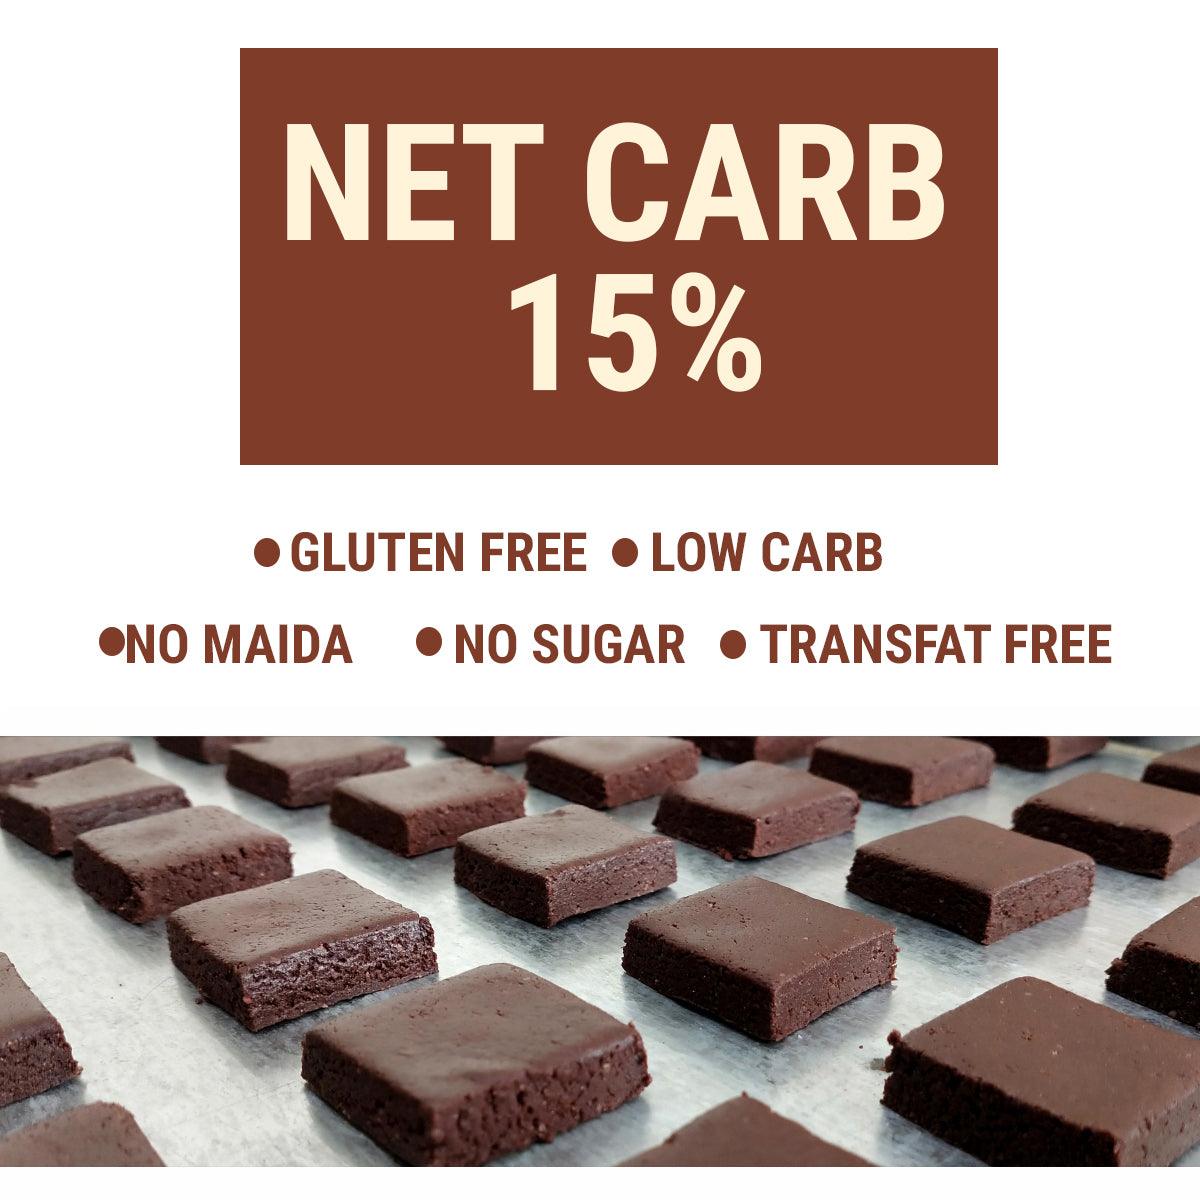 NutroActive Keto Chocolate Hazelnut Barfi Low Carb Sugar Free Sweets - 200g - Diabexy